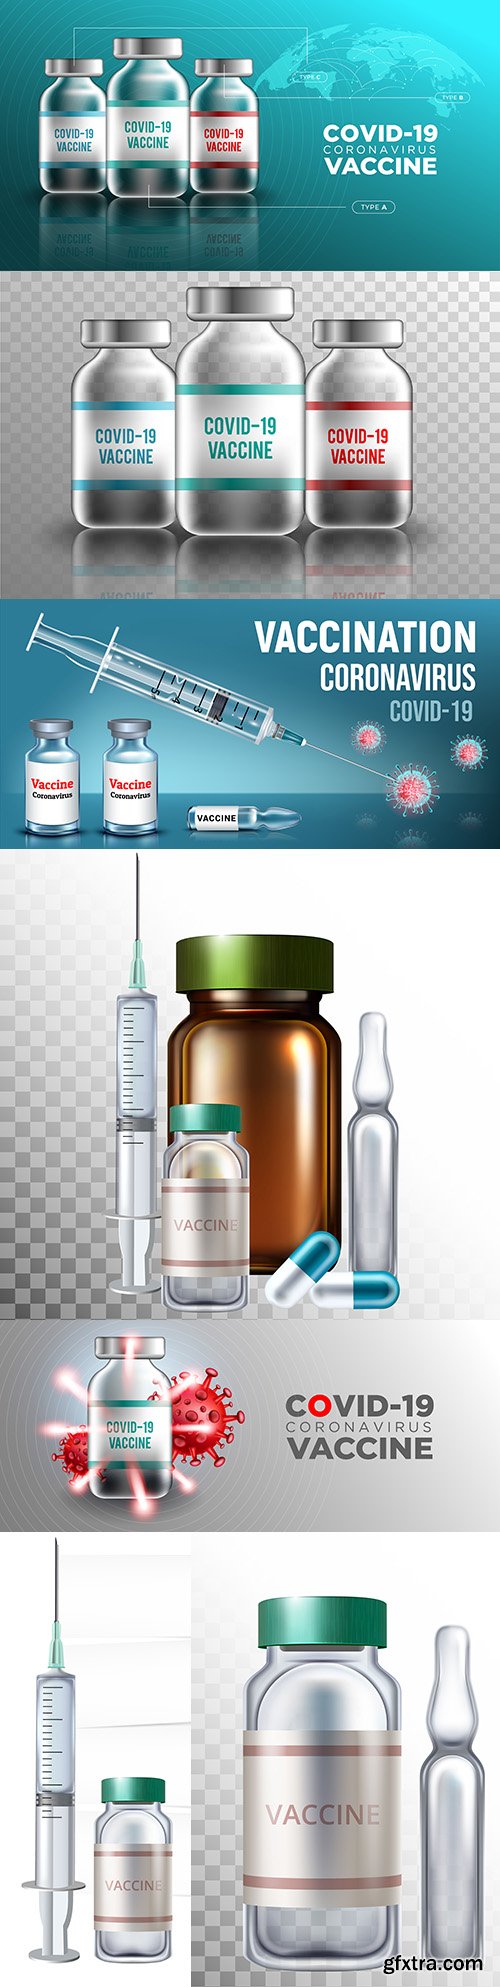 Vaccination against coronavirus covid-19 design banner